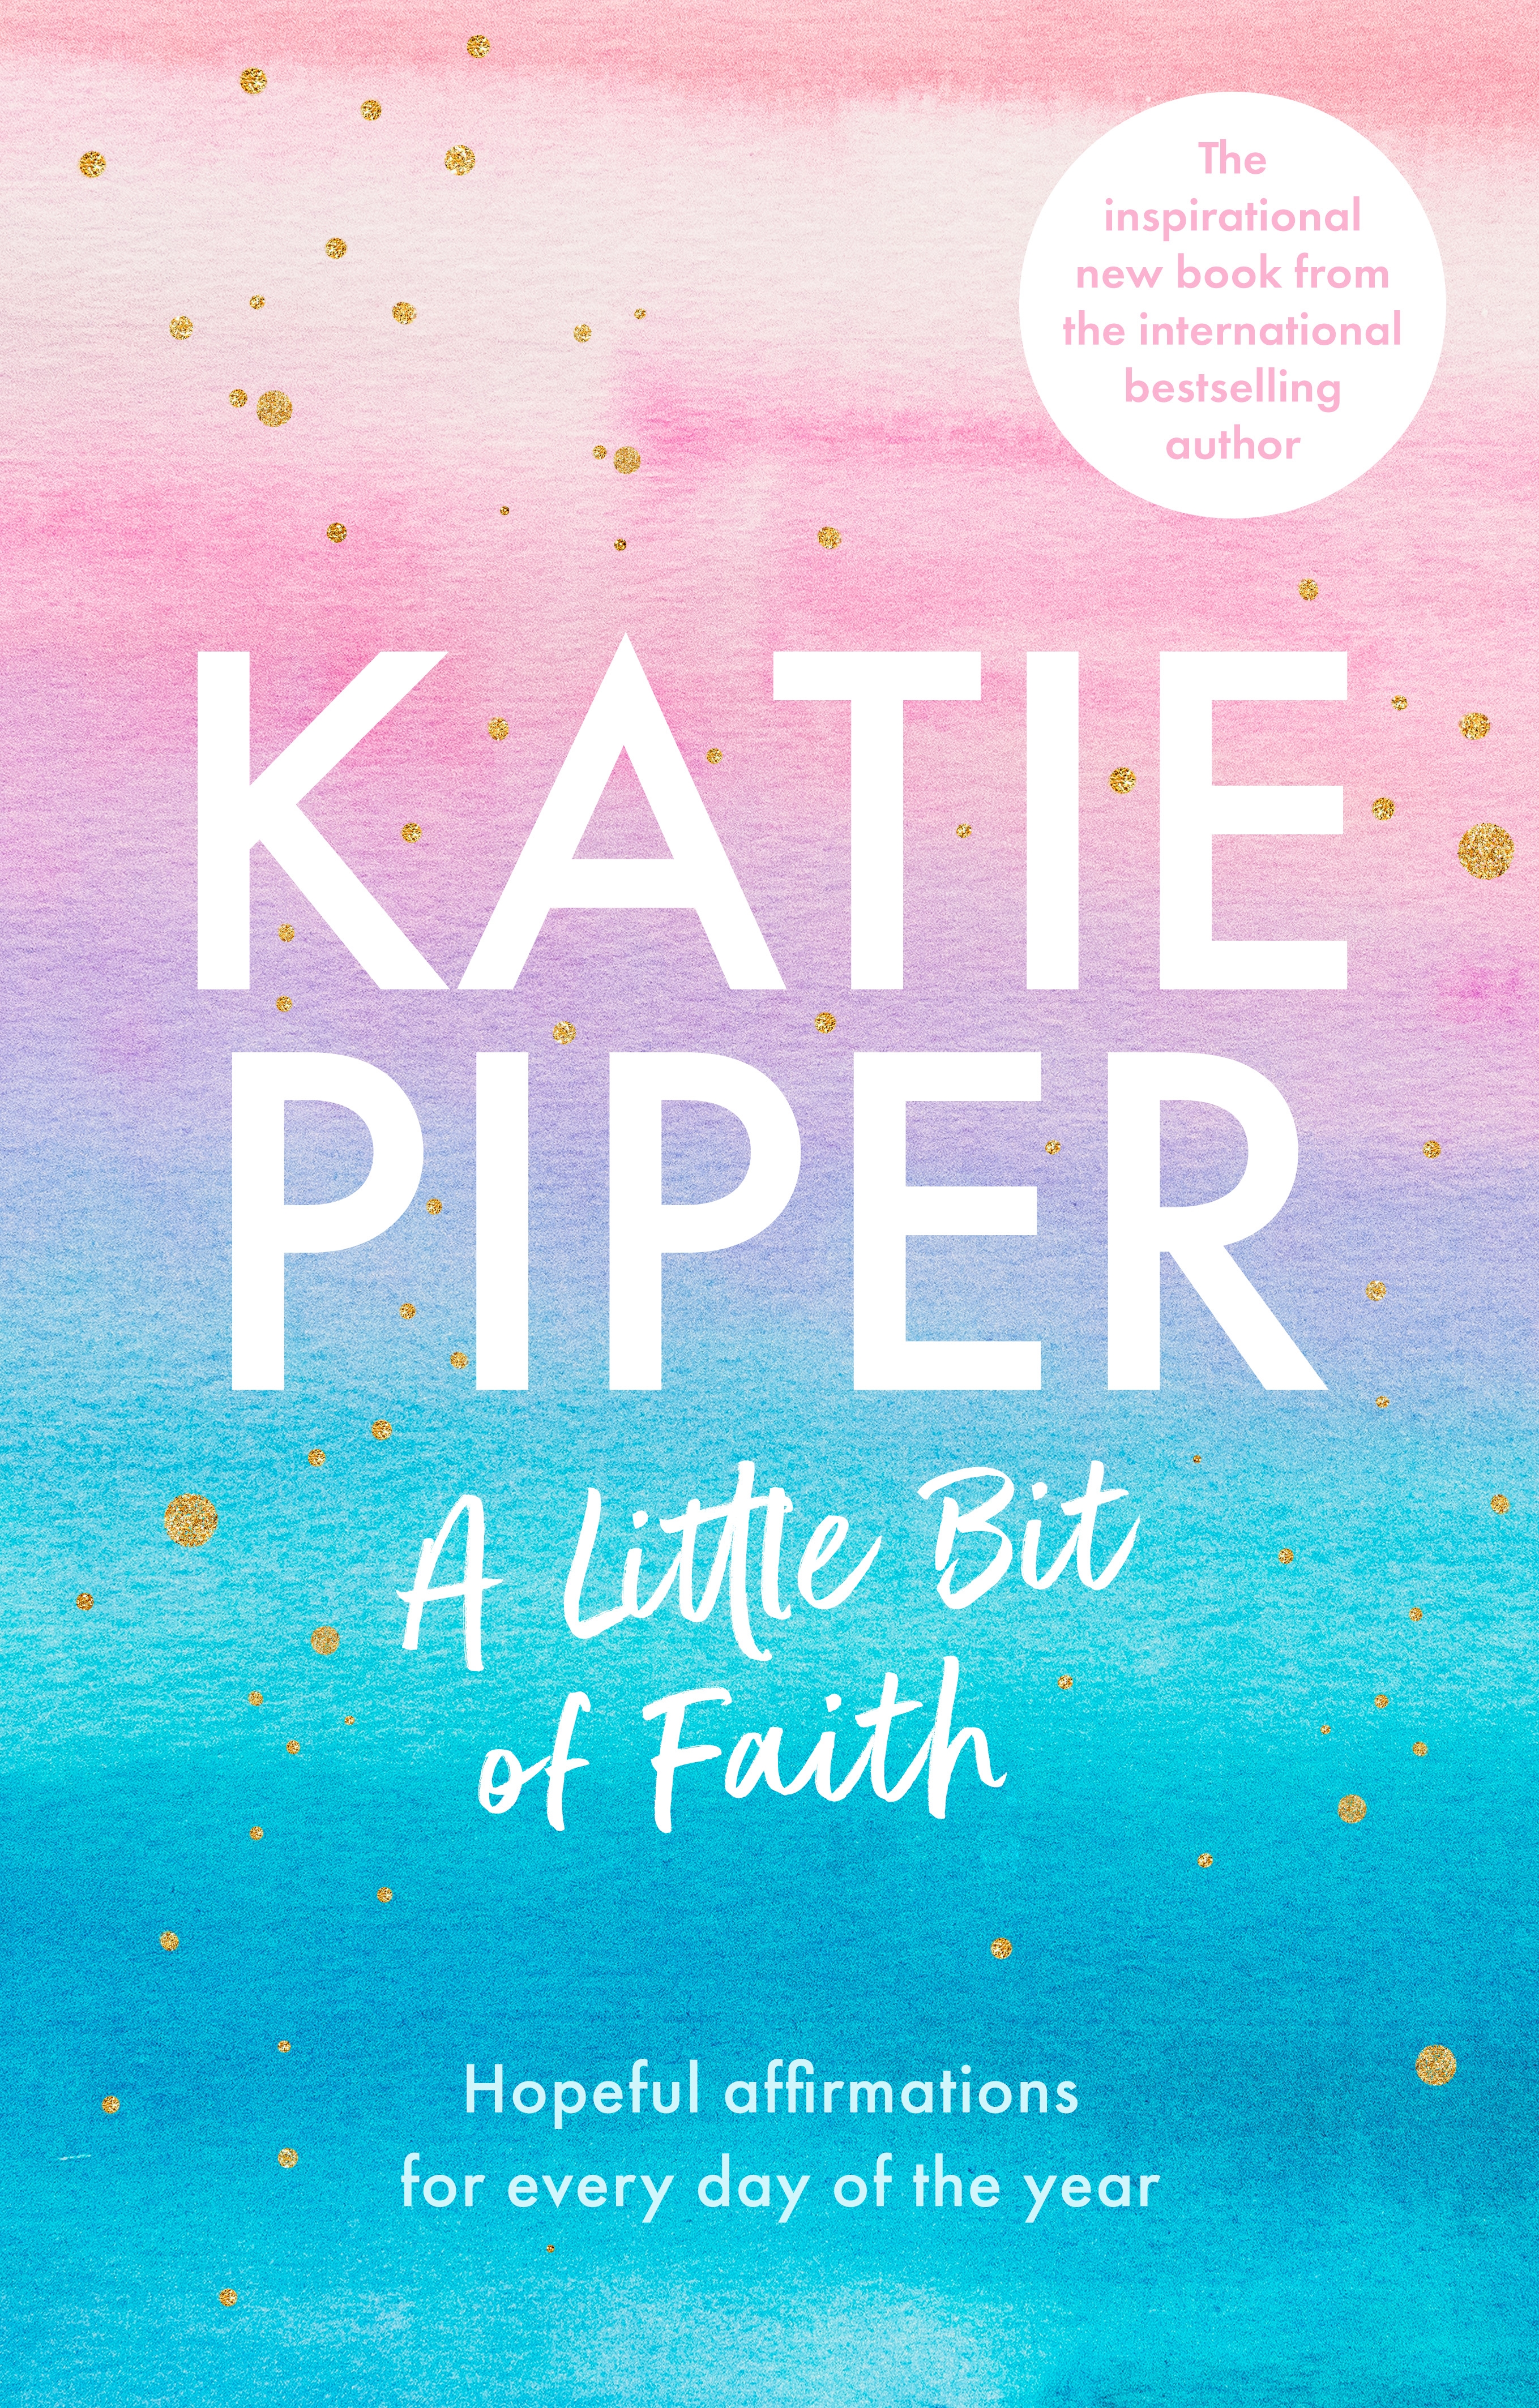 A Little Bit of Faith book cover image